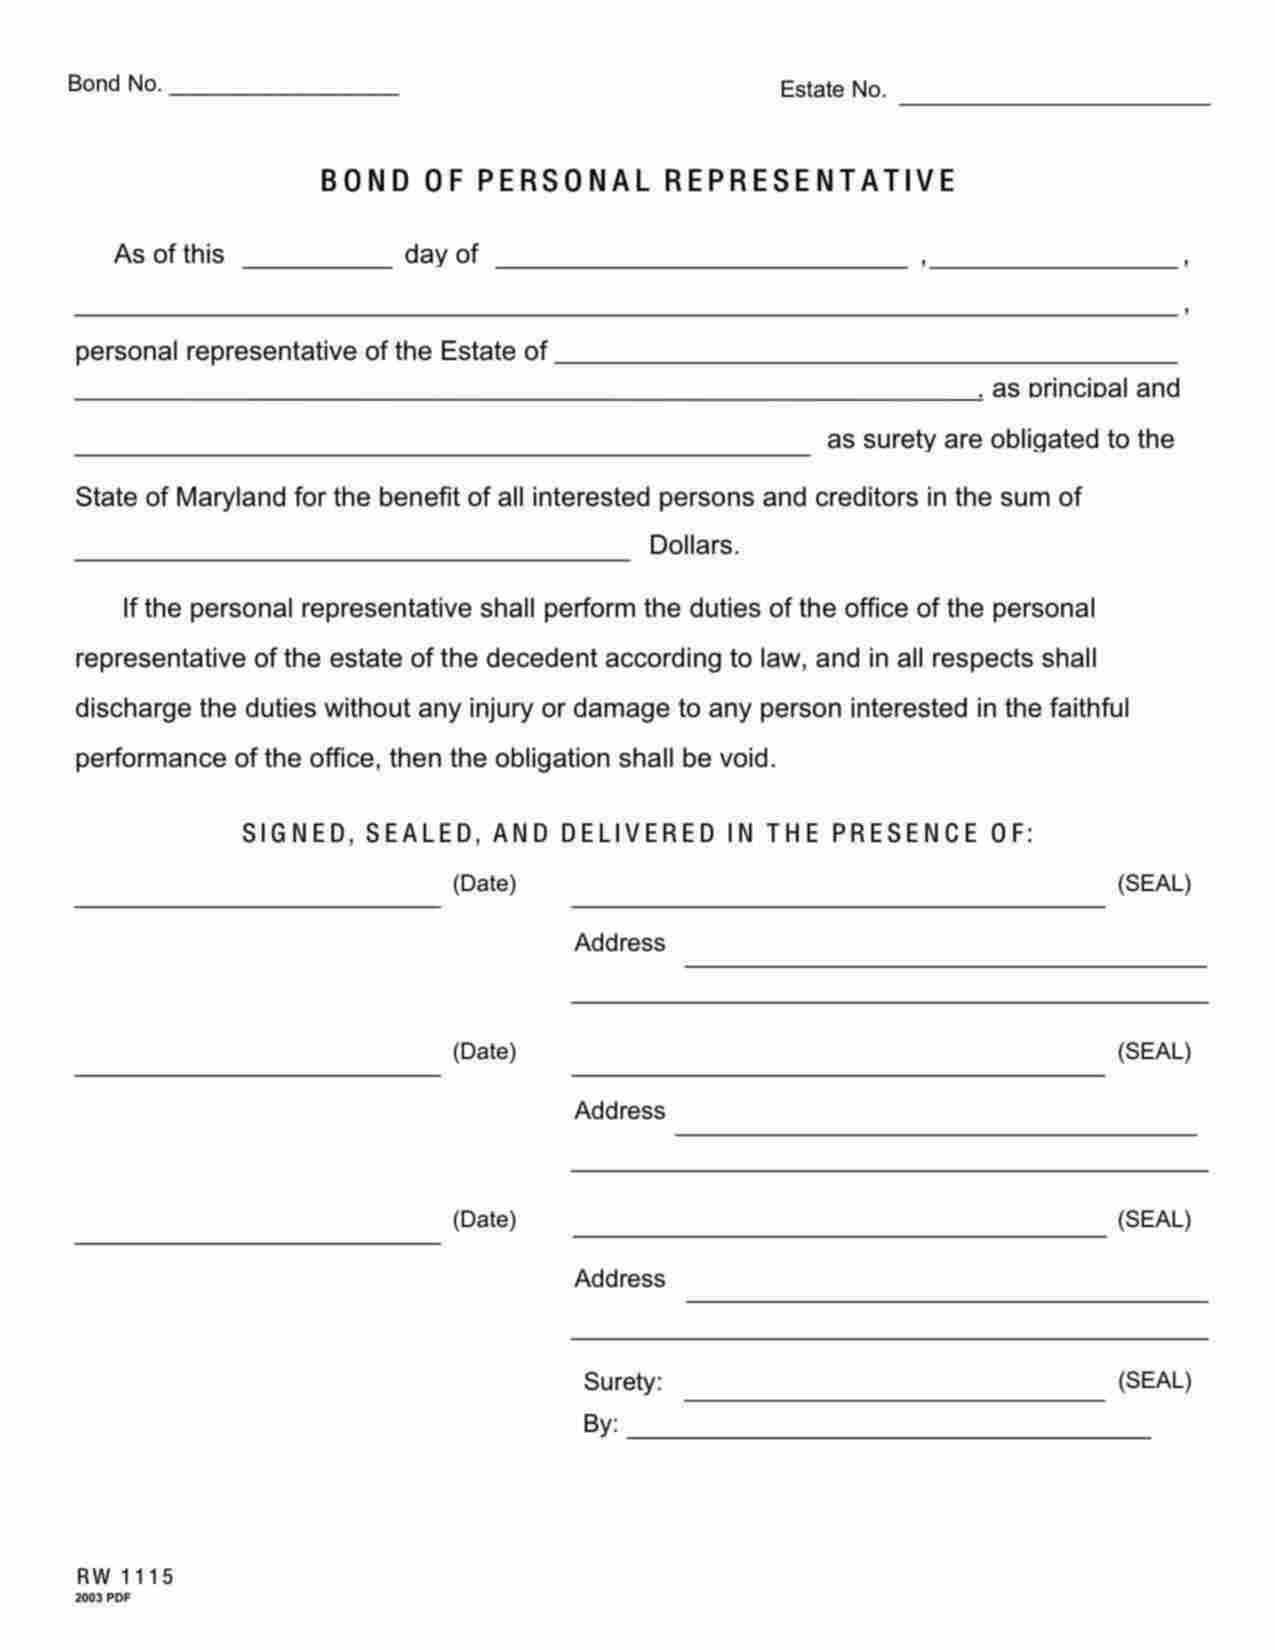 Maryland Personal Representative Bond Form